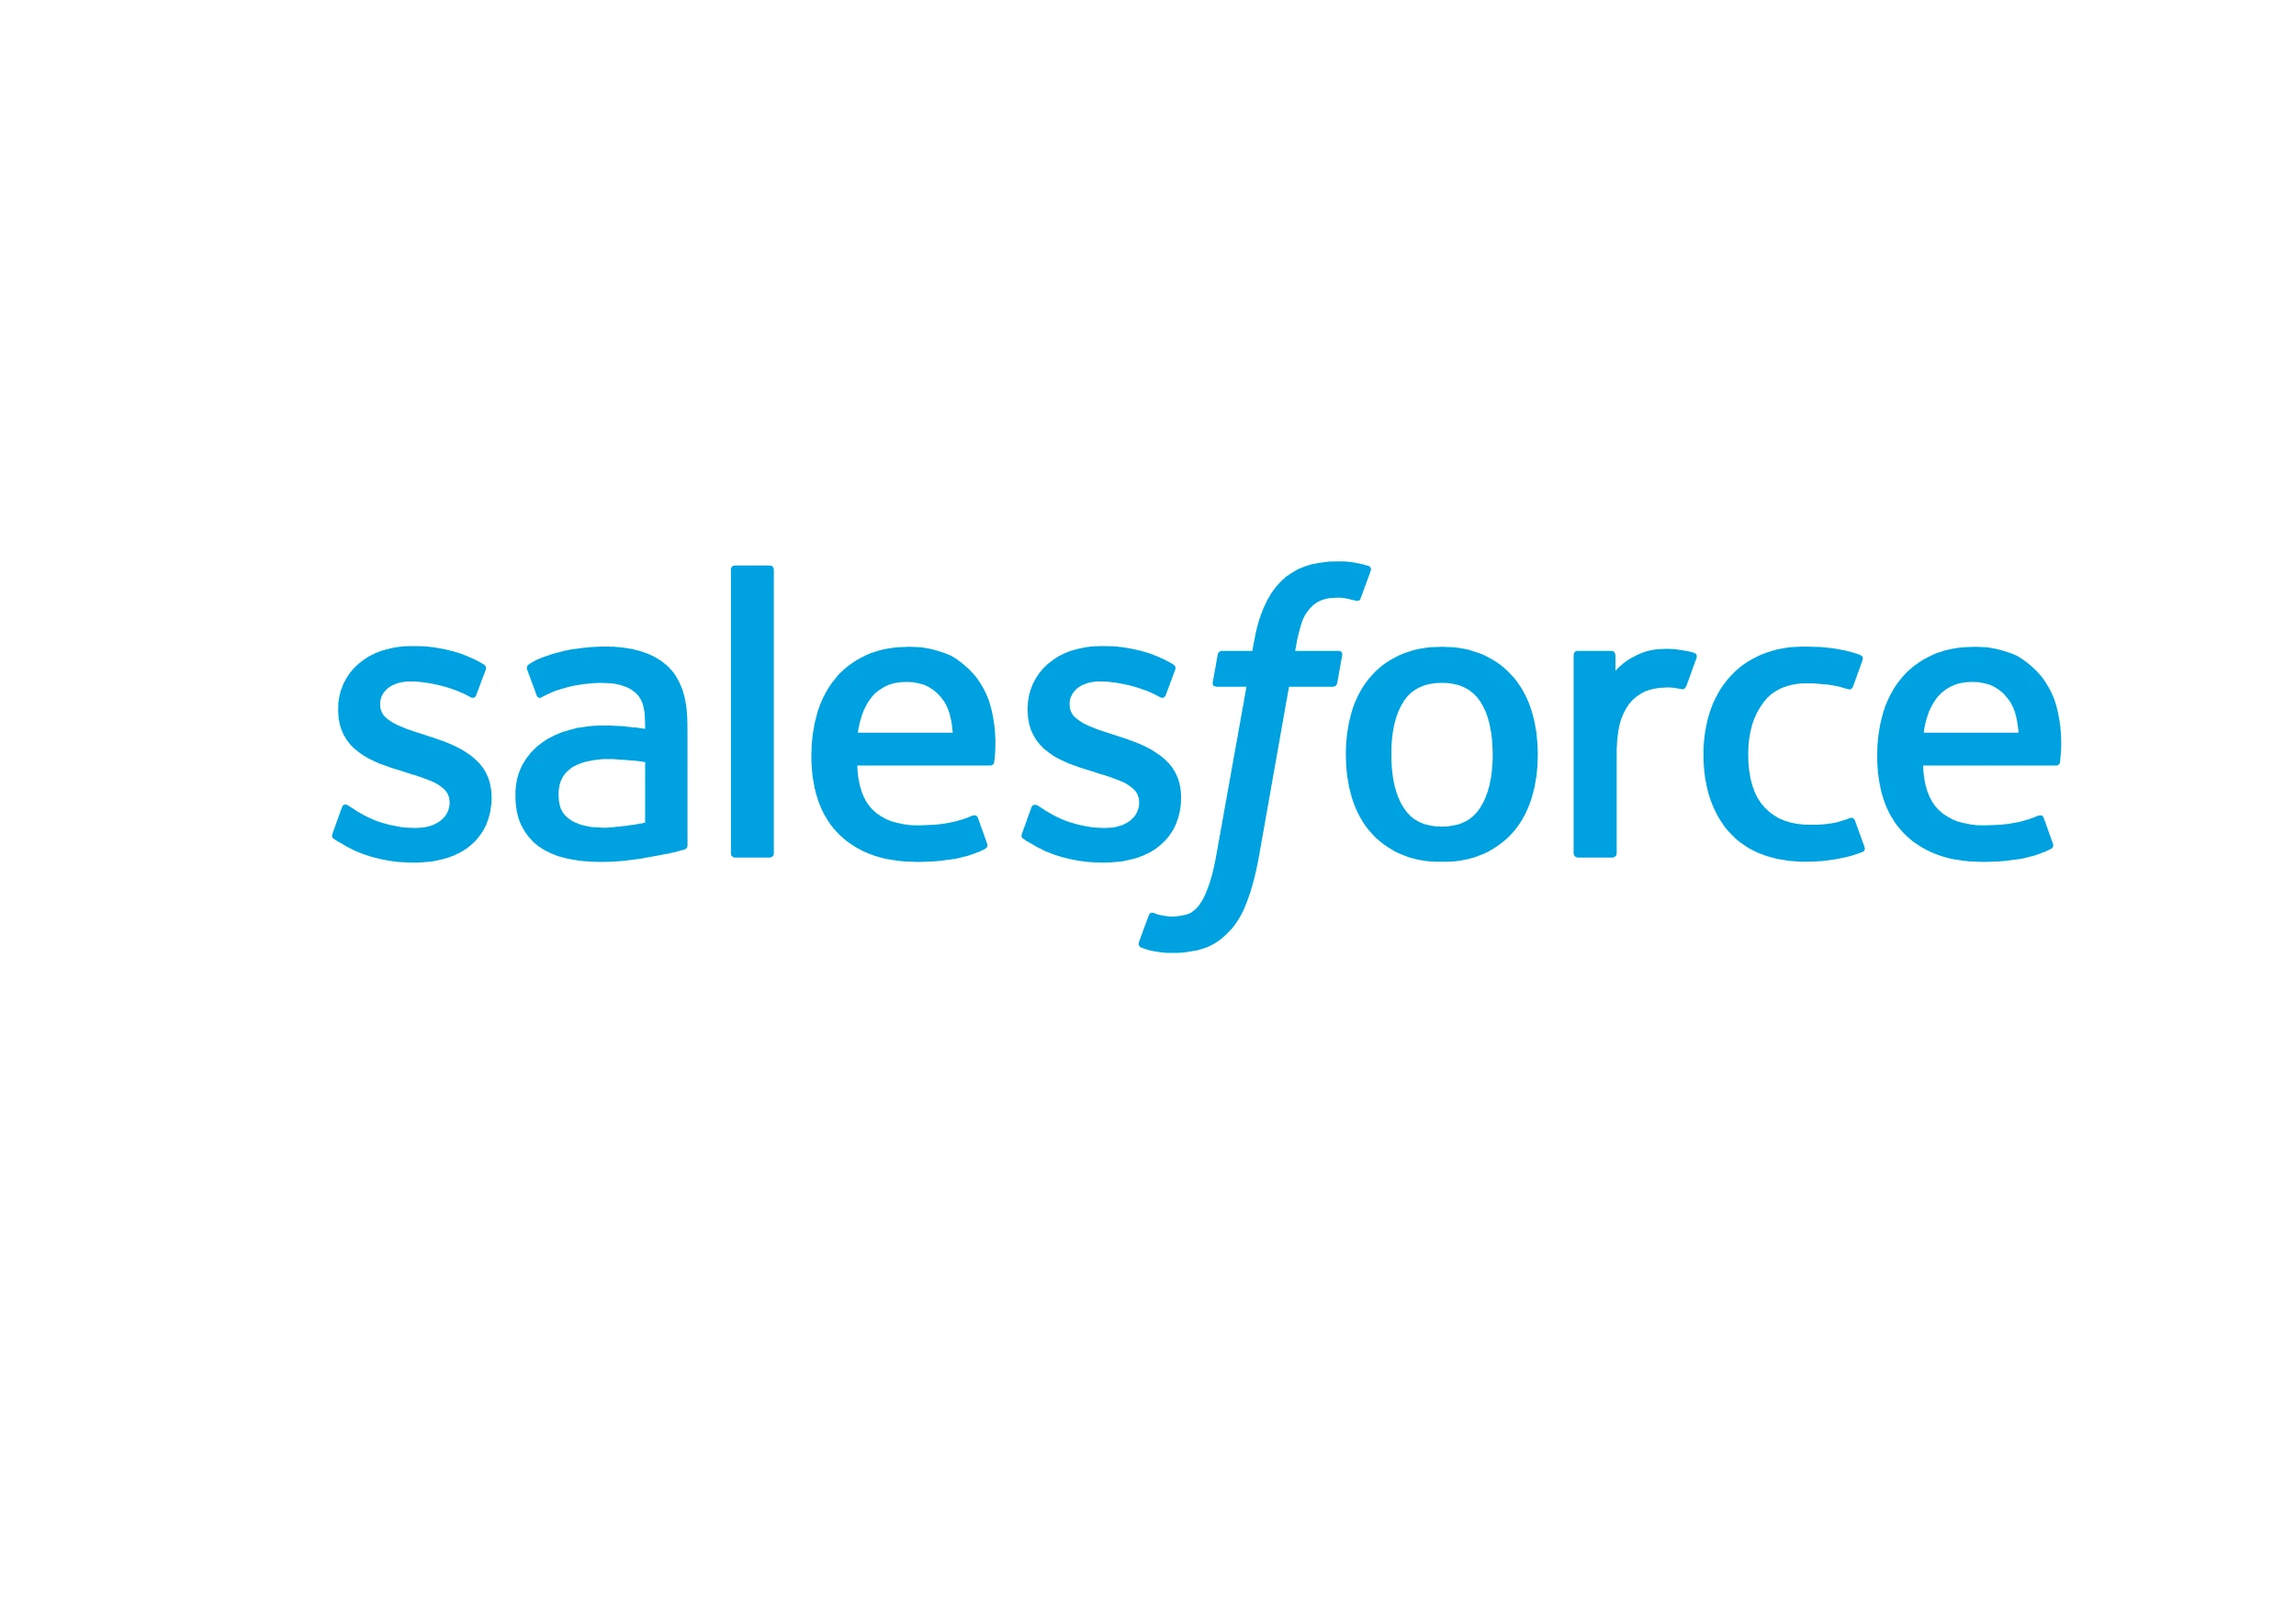 Salesforce-logo